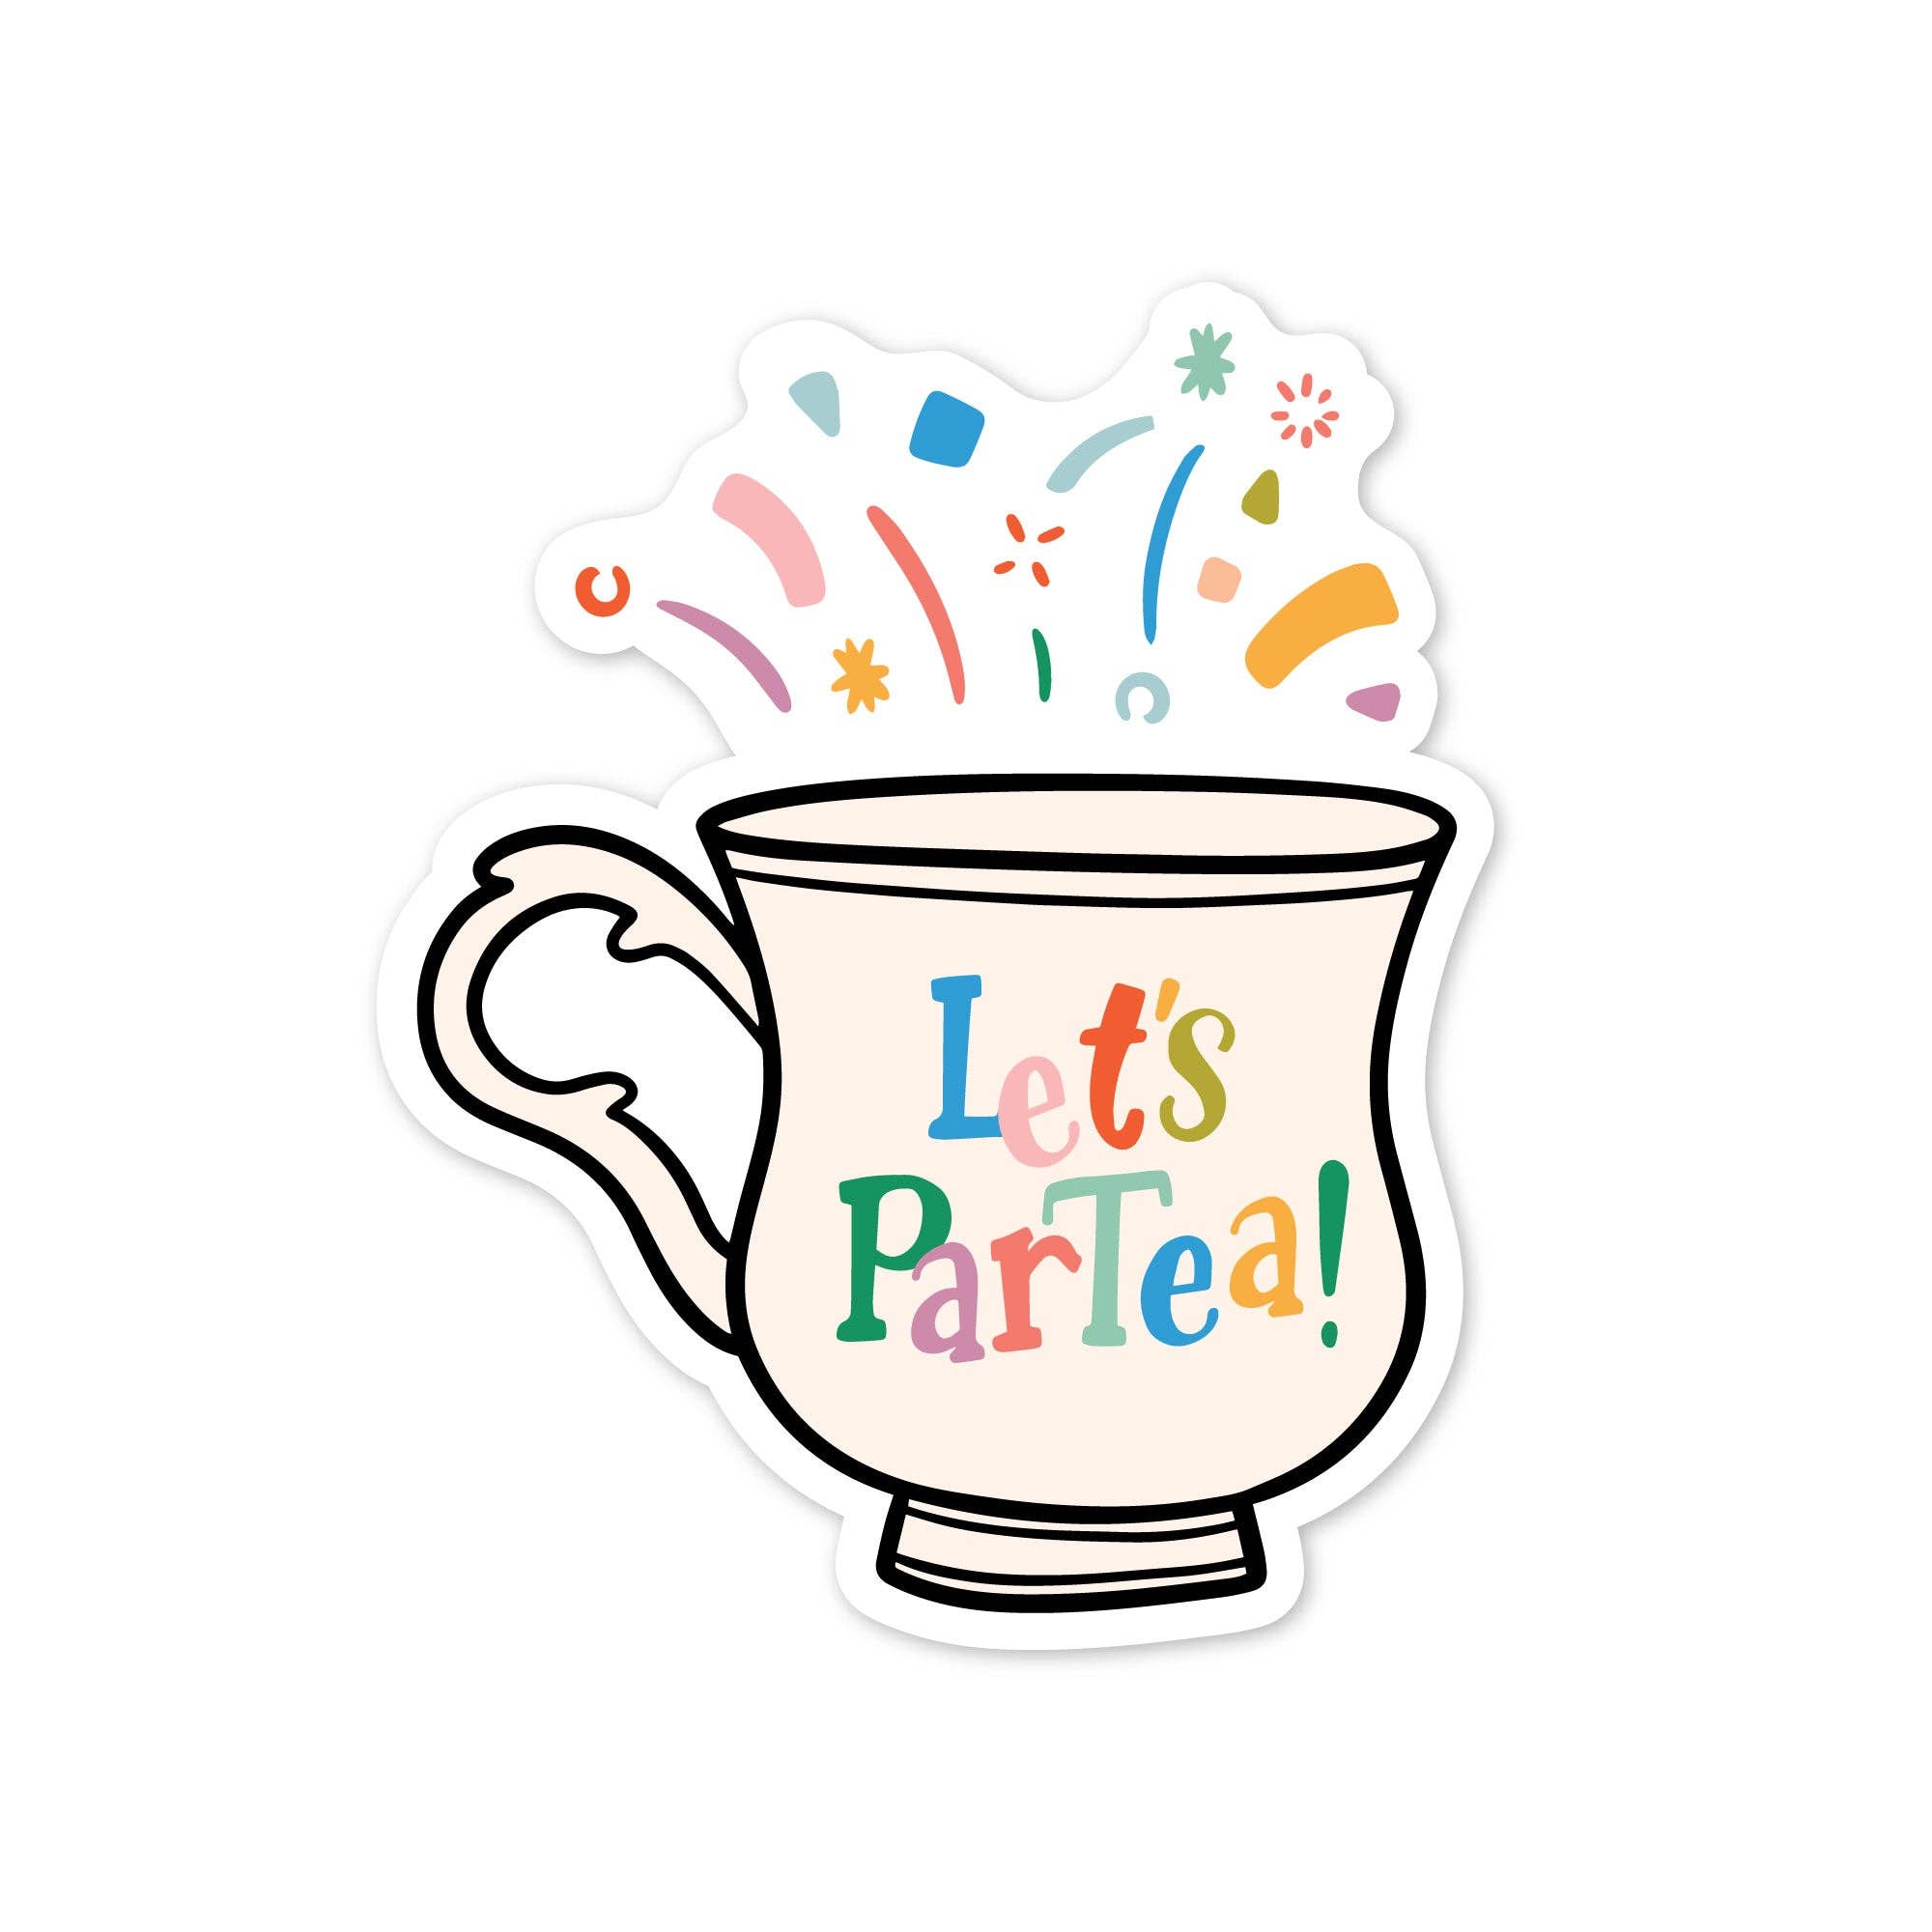 Let's ParTea Confetti Teacup Sticker - Spiral Circle